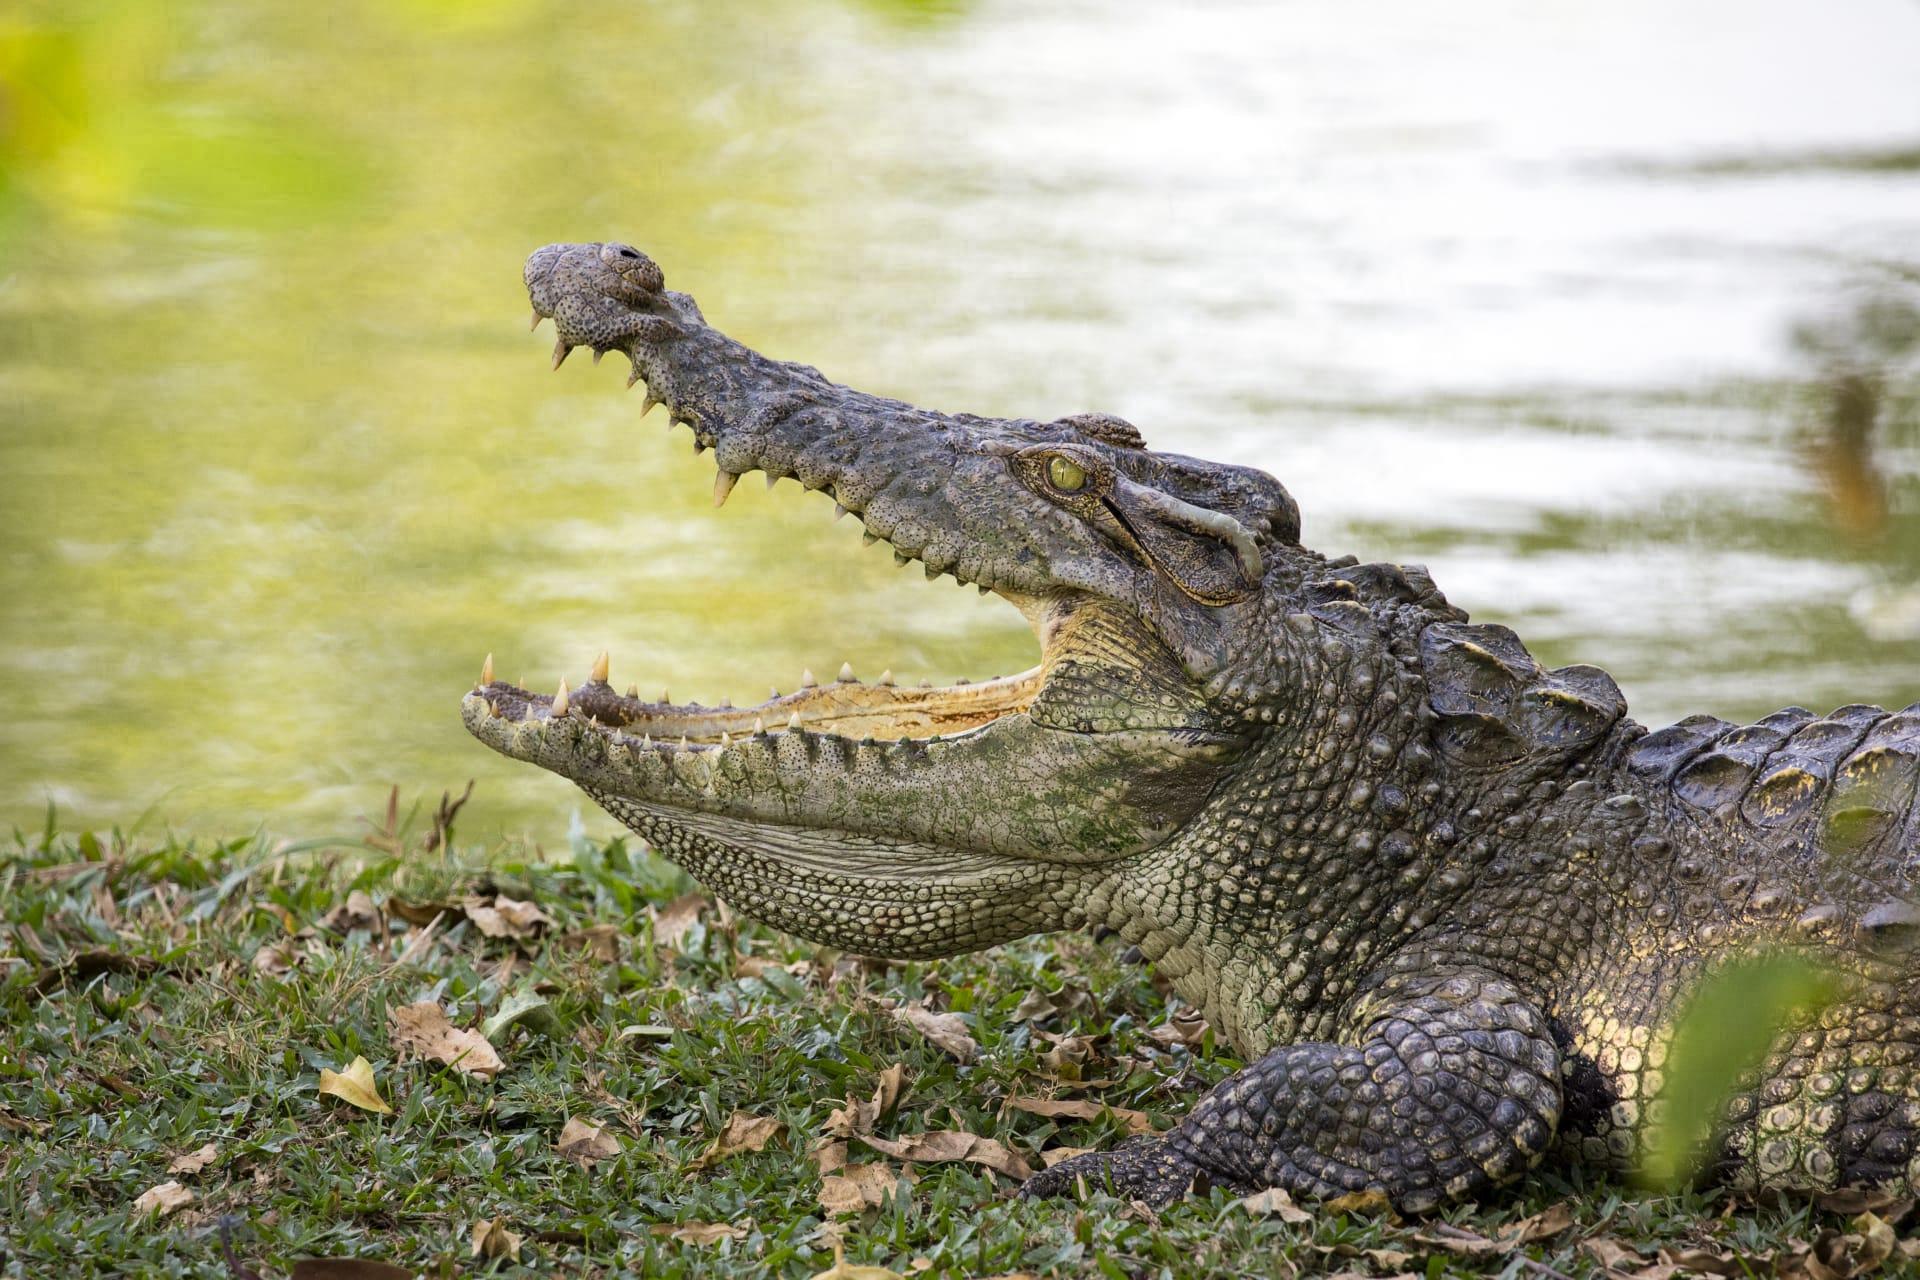 Crocodile pictures